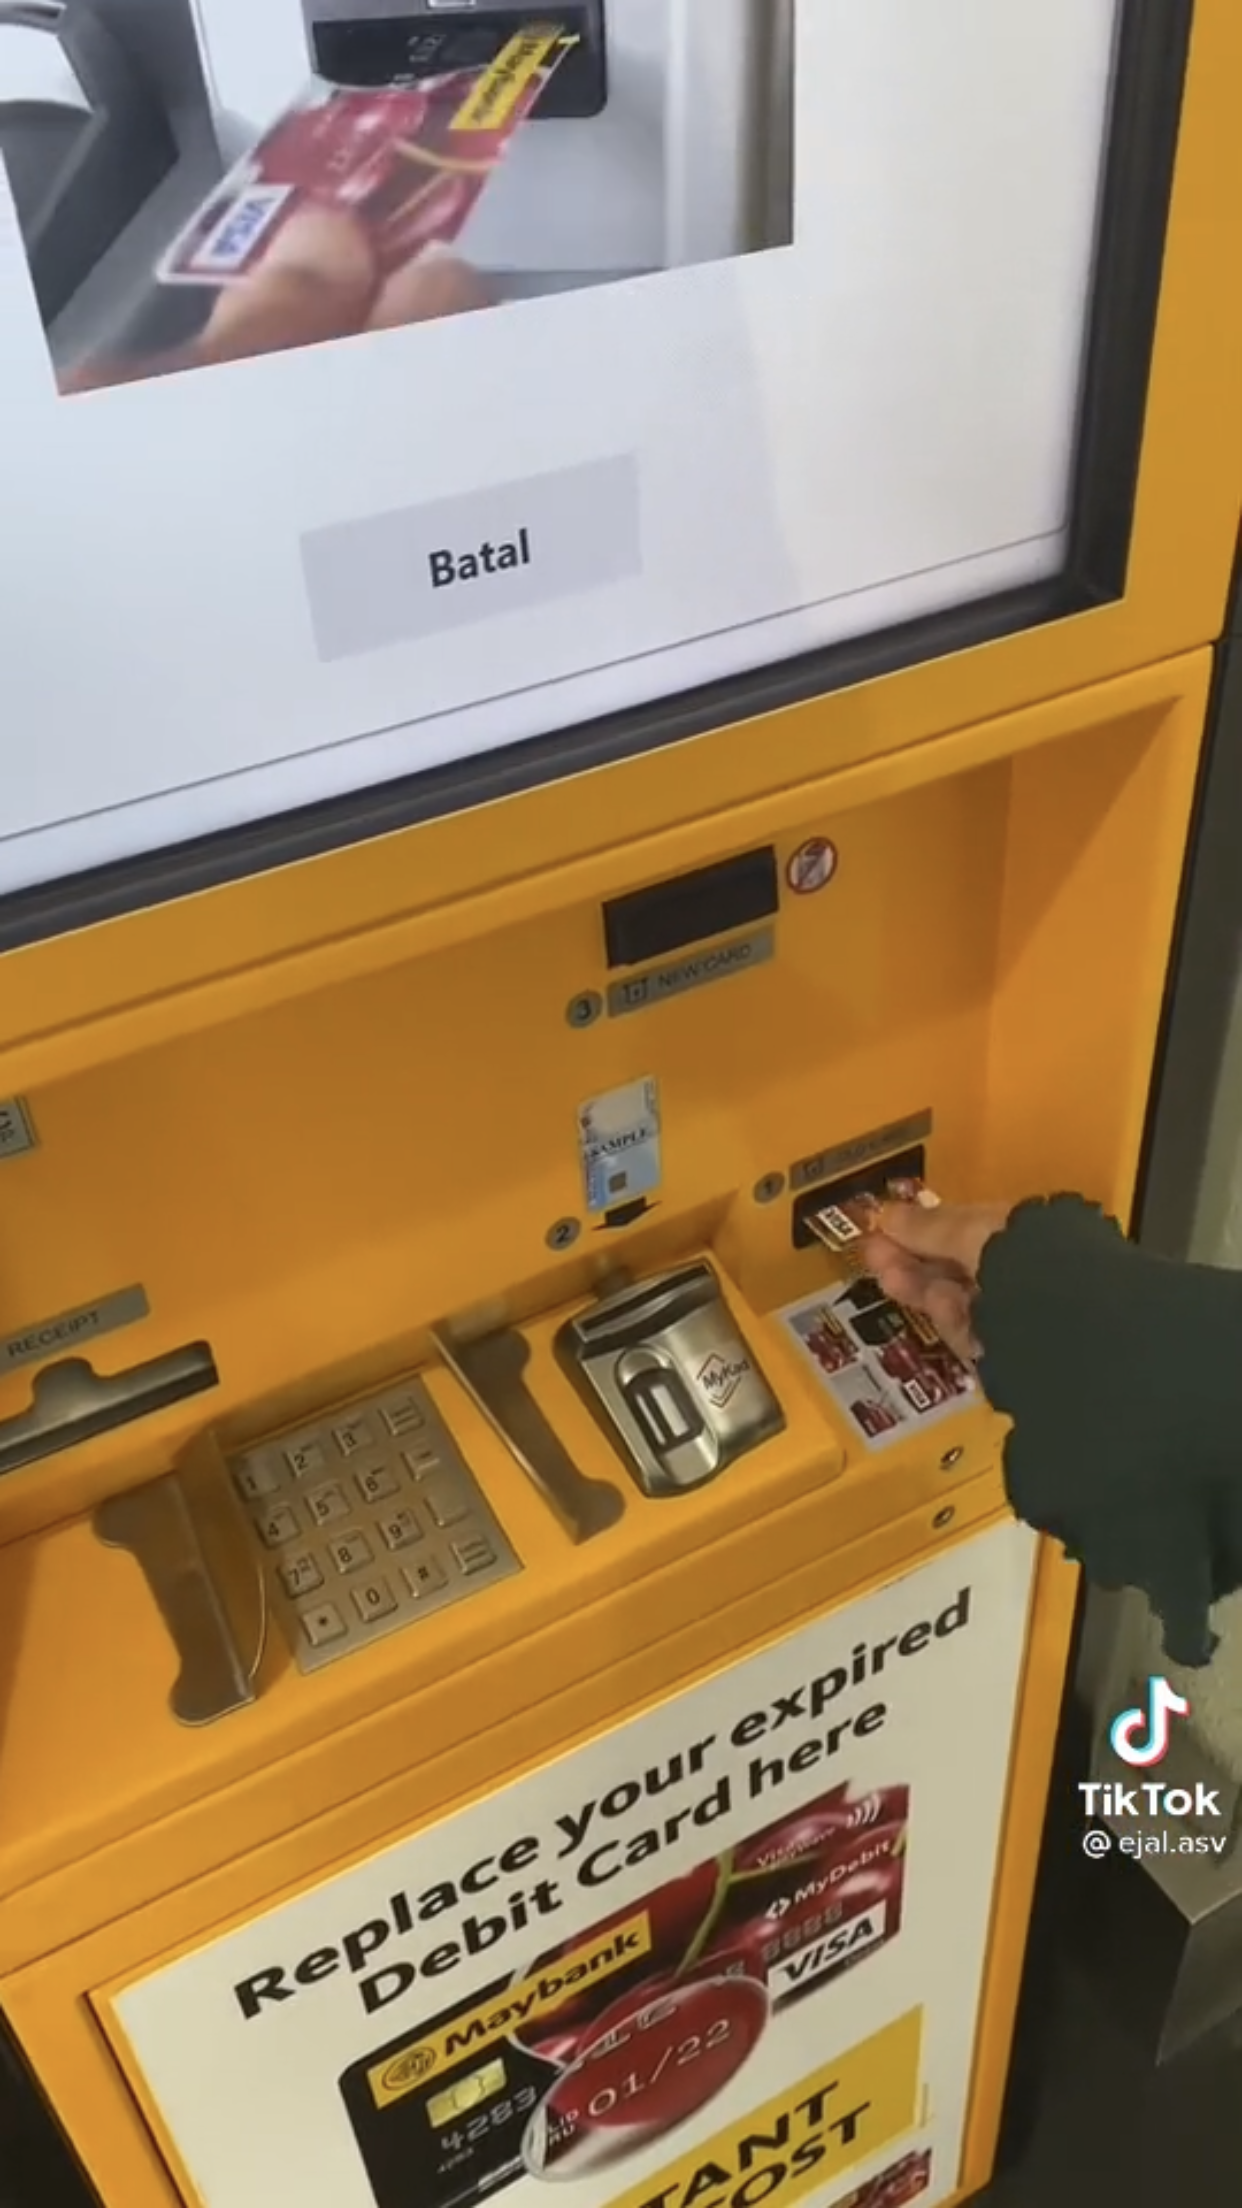 Debit card replacement kiosk